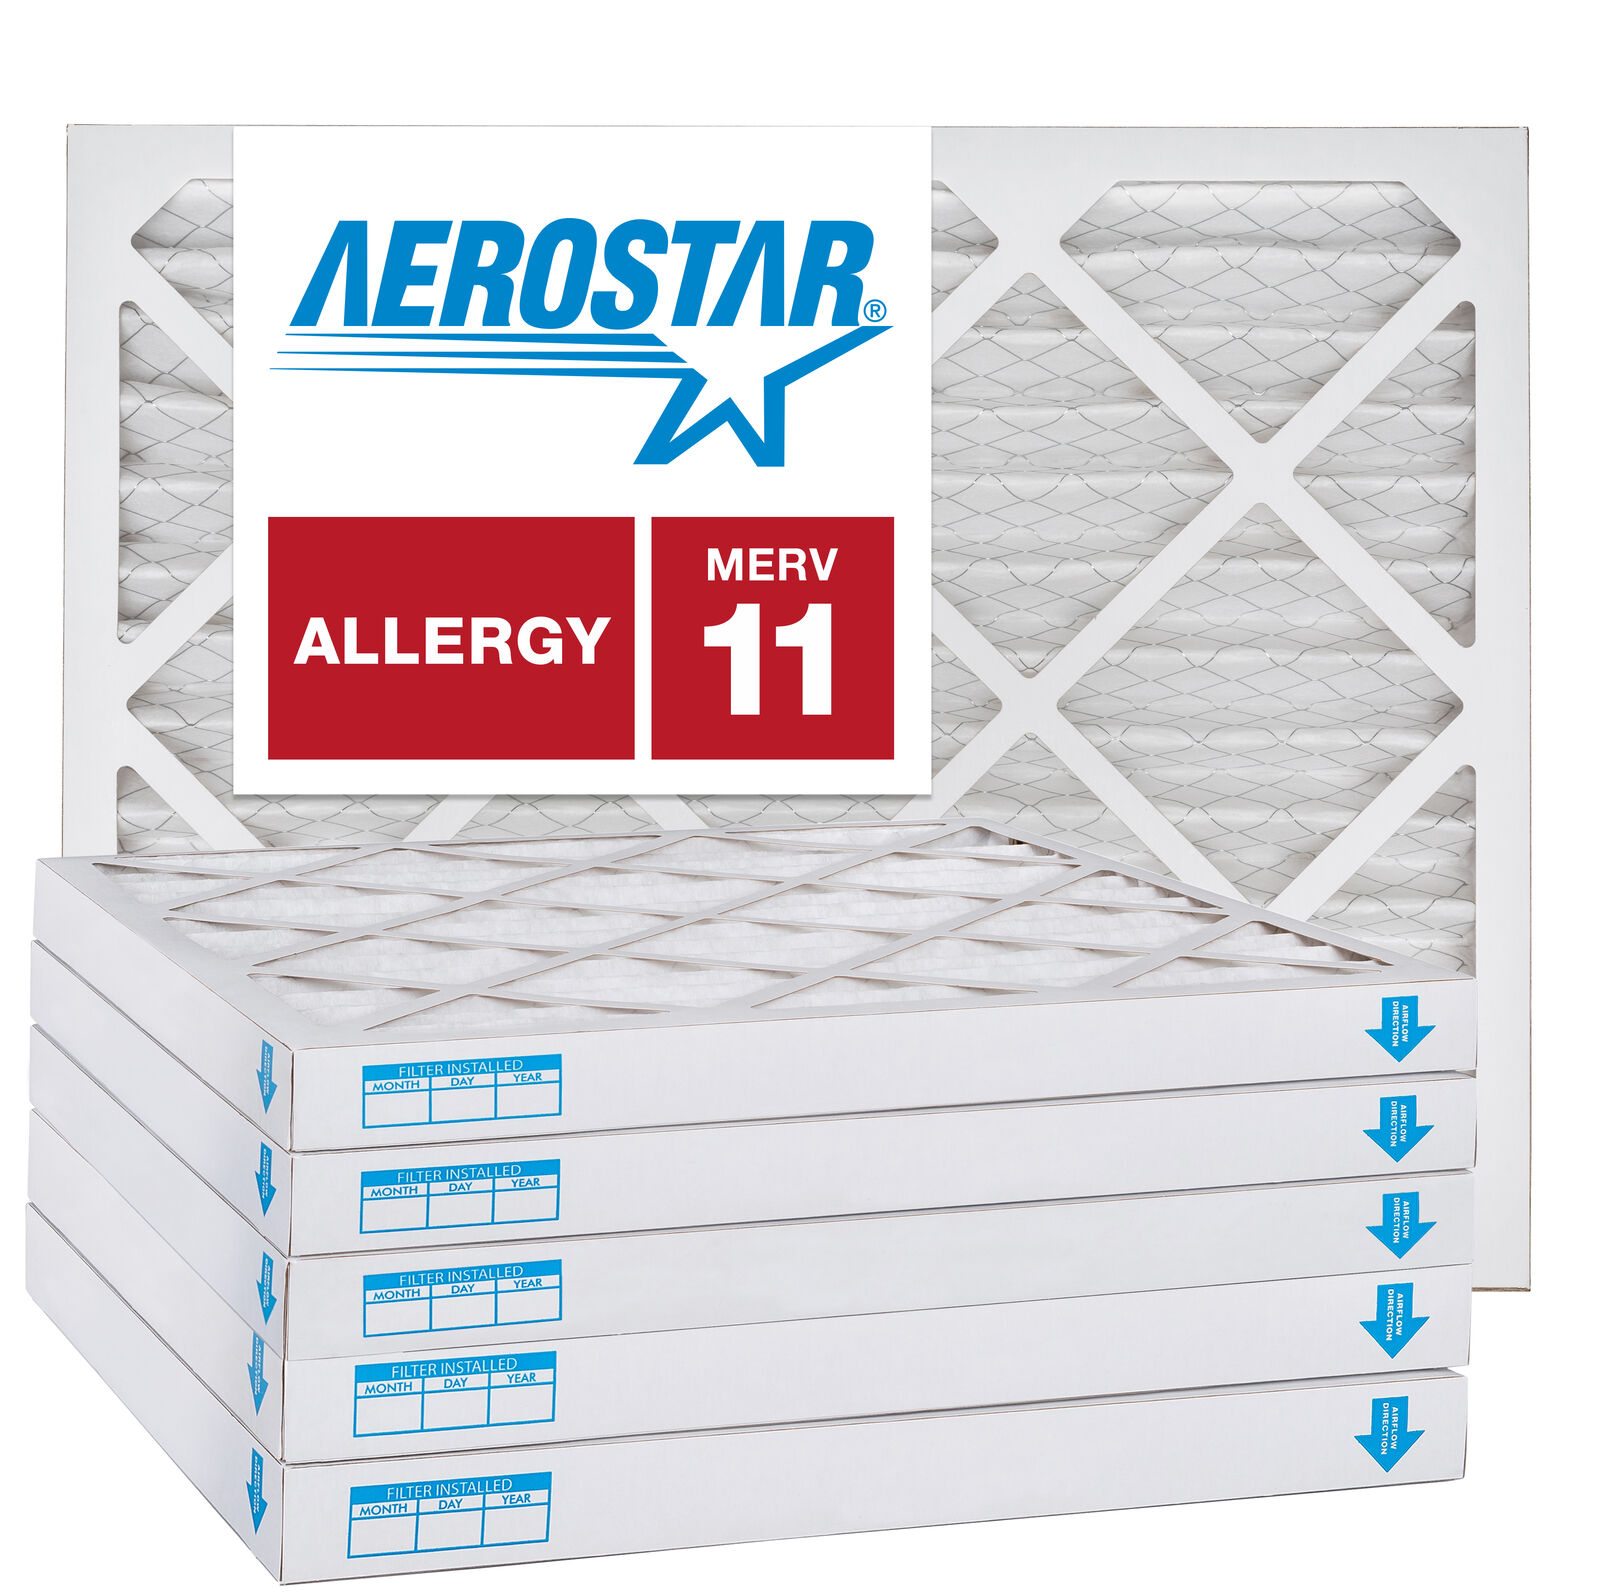 20x25x2 AC and Furnace Air Filter by Aerostar - MERV 11, Box of 12